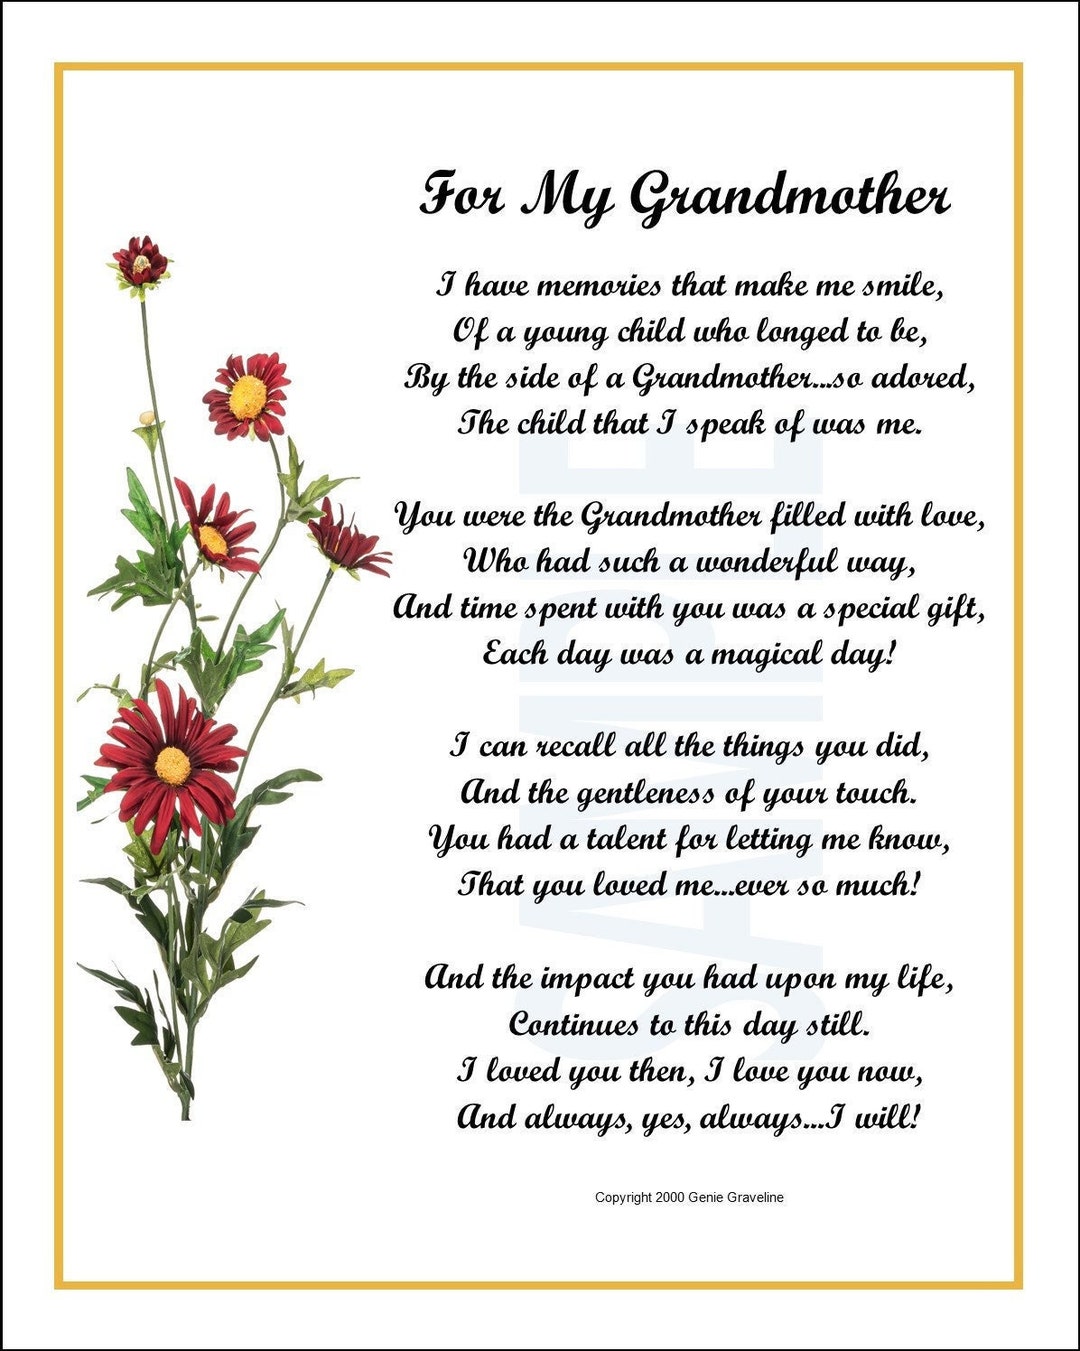 a grandmother's love essay